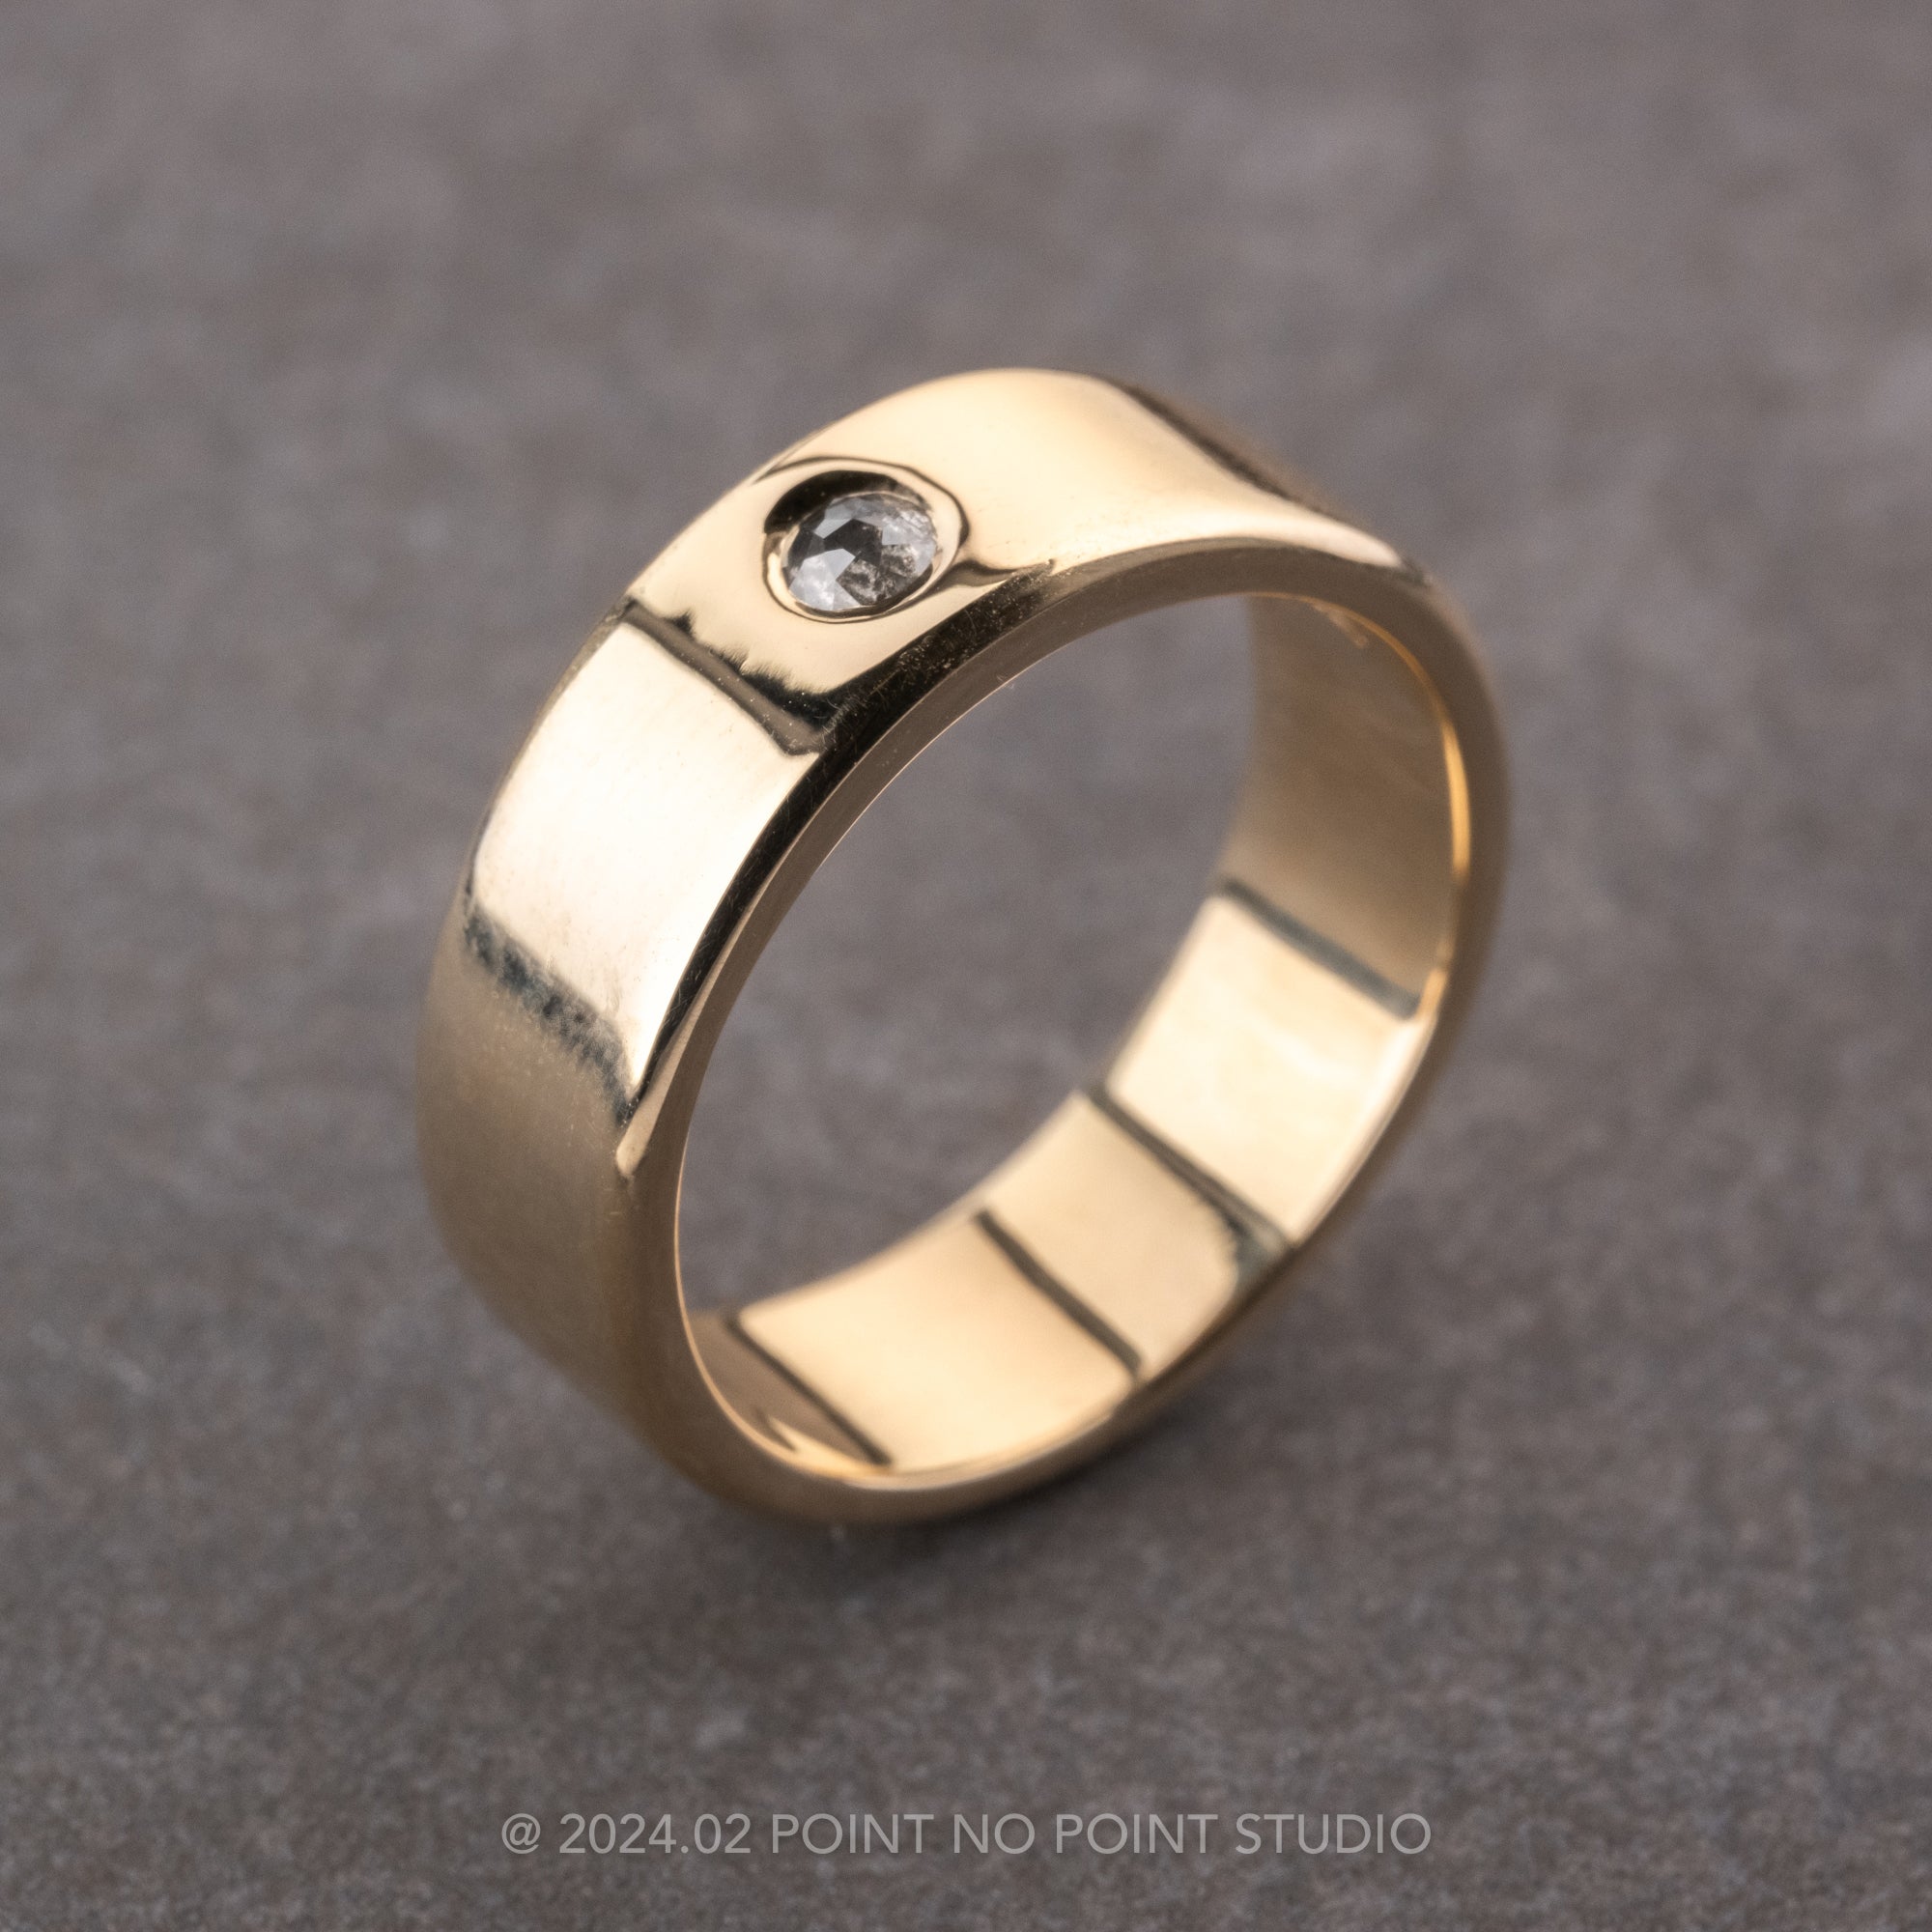 Buy 22Kt Gold Mens Engagement Ring 96VJ6567 Online from Vaibhav Jewellers